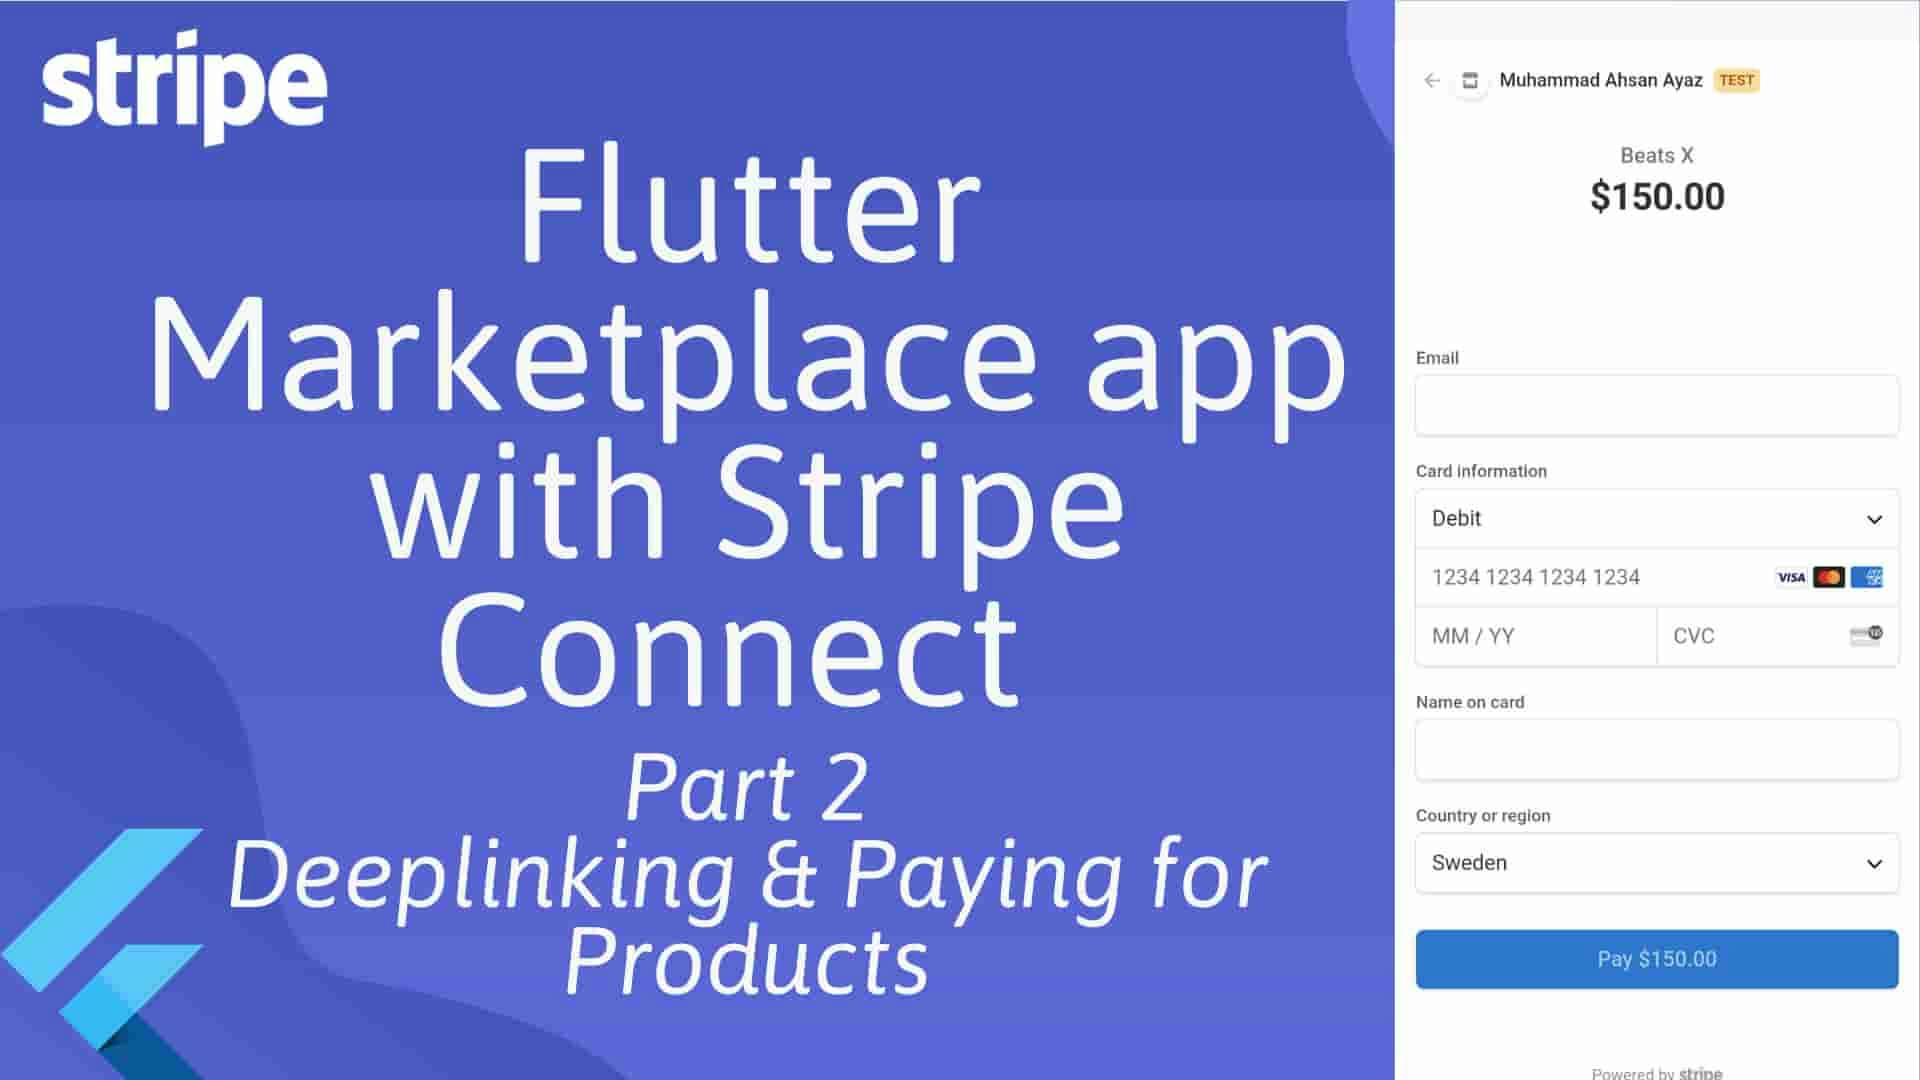 flutter-marketplace-app-with-stripe/part-2